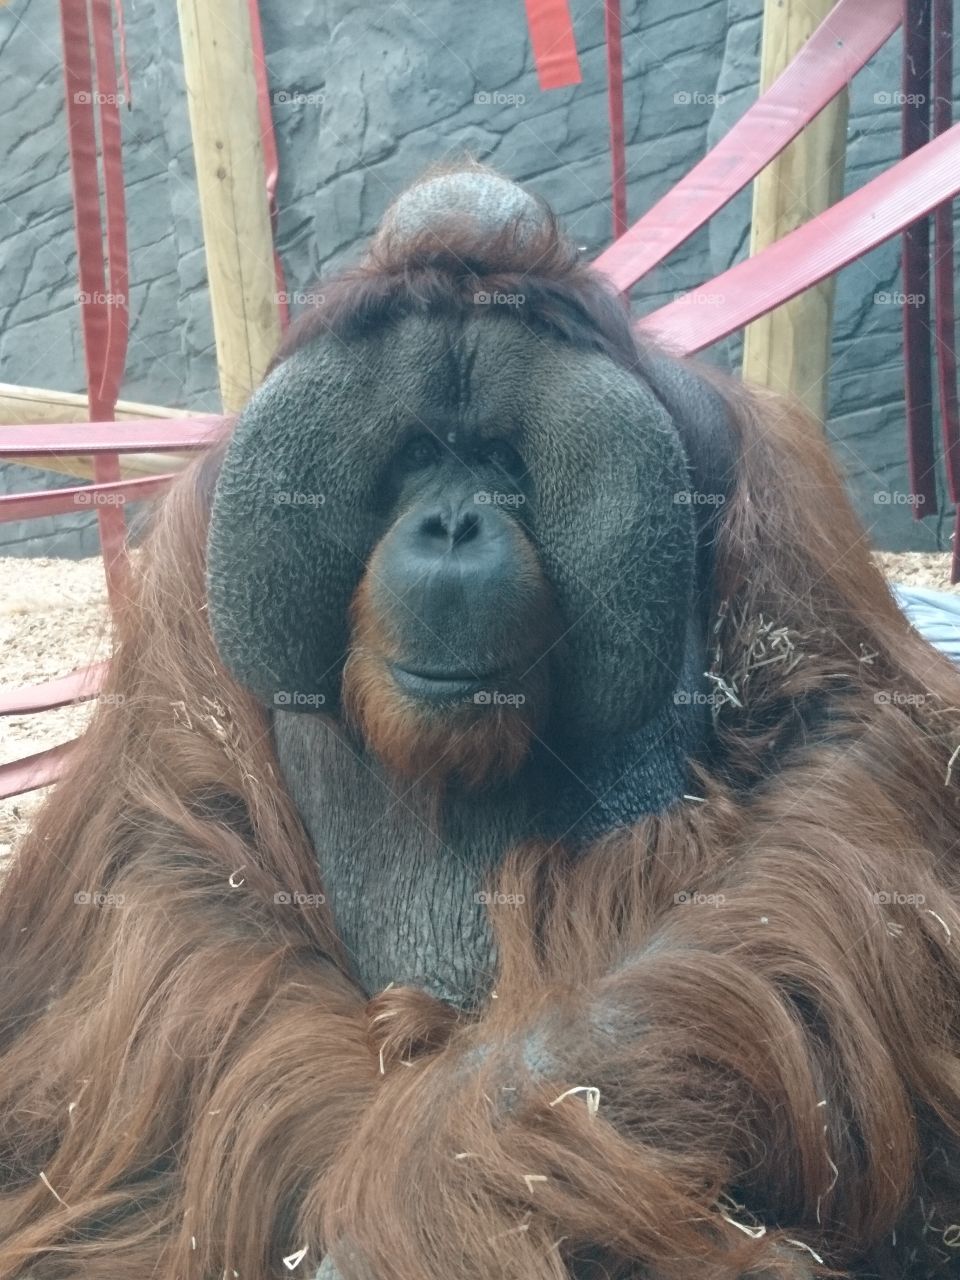 Orangutan at the zoo close up